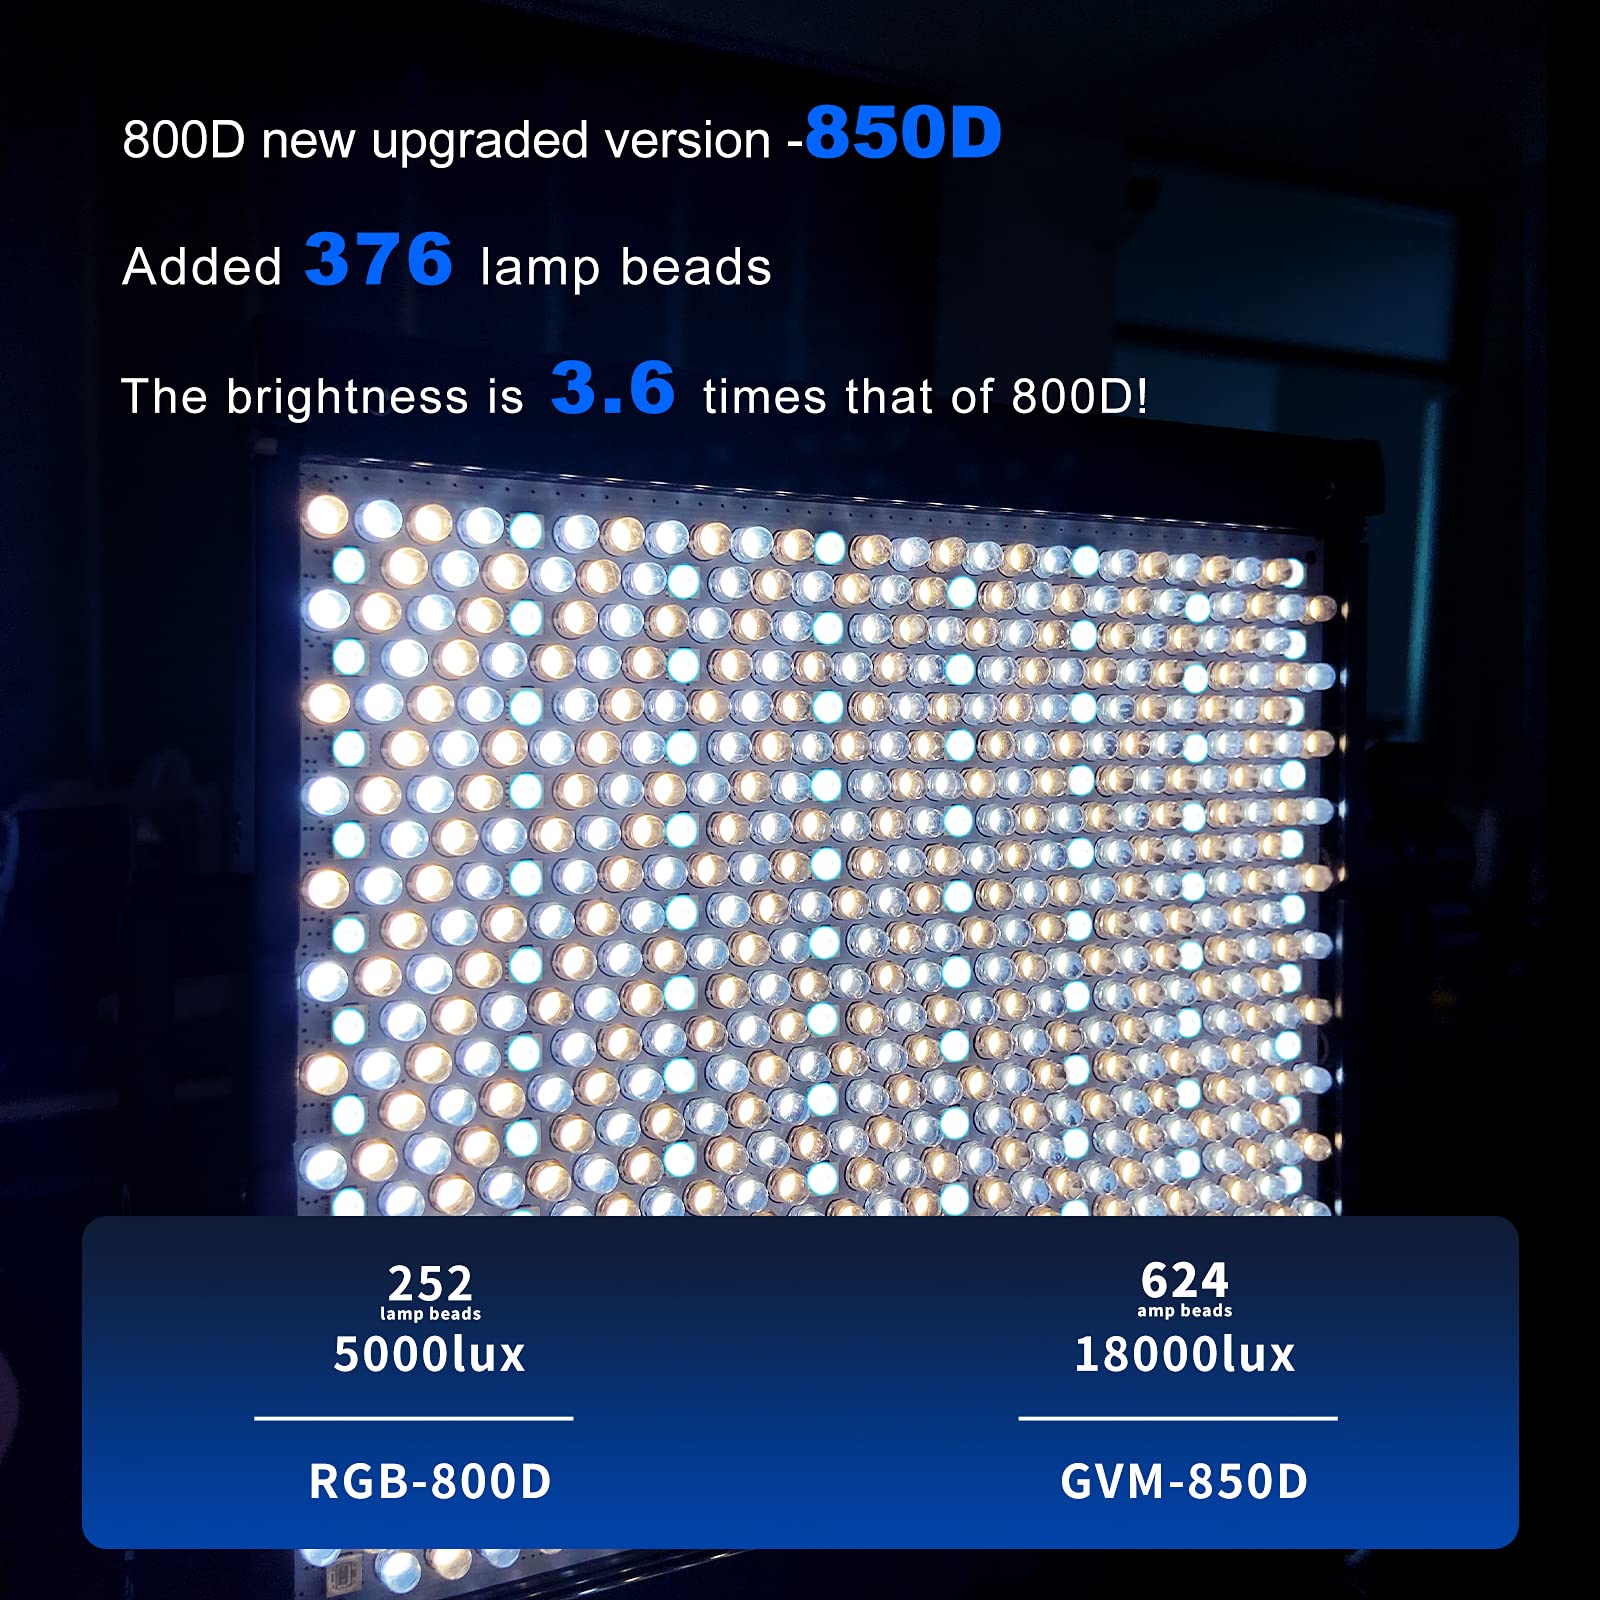 GVM RGB Video Lighting, 360° Full Color Led Video Light with APP Control, 3 Packs 850D Photography Lighting Kit CRI 97, YouTube, Aluminum Alloy Shell